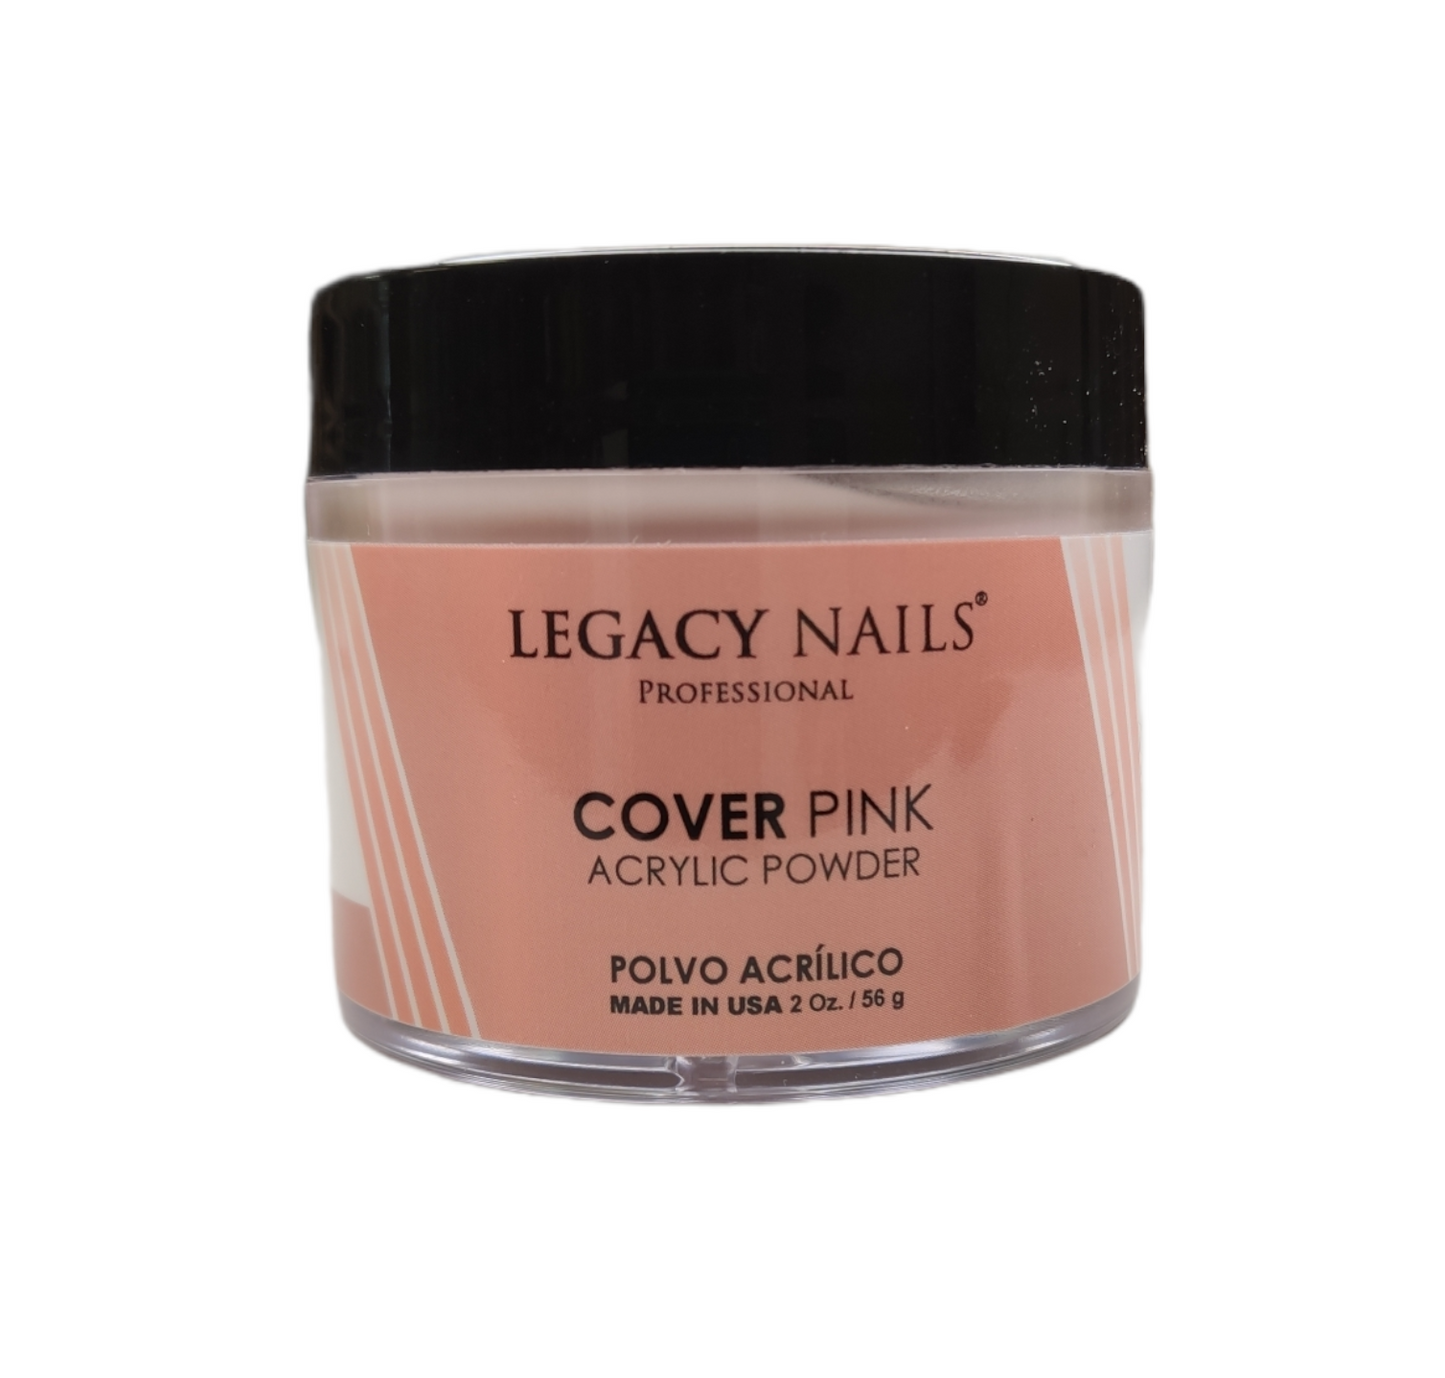 Legacy Nails Cover Pink Acrylic Powder 2 oz